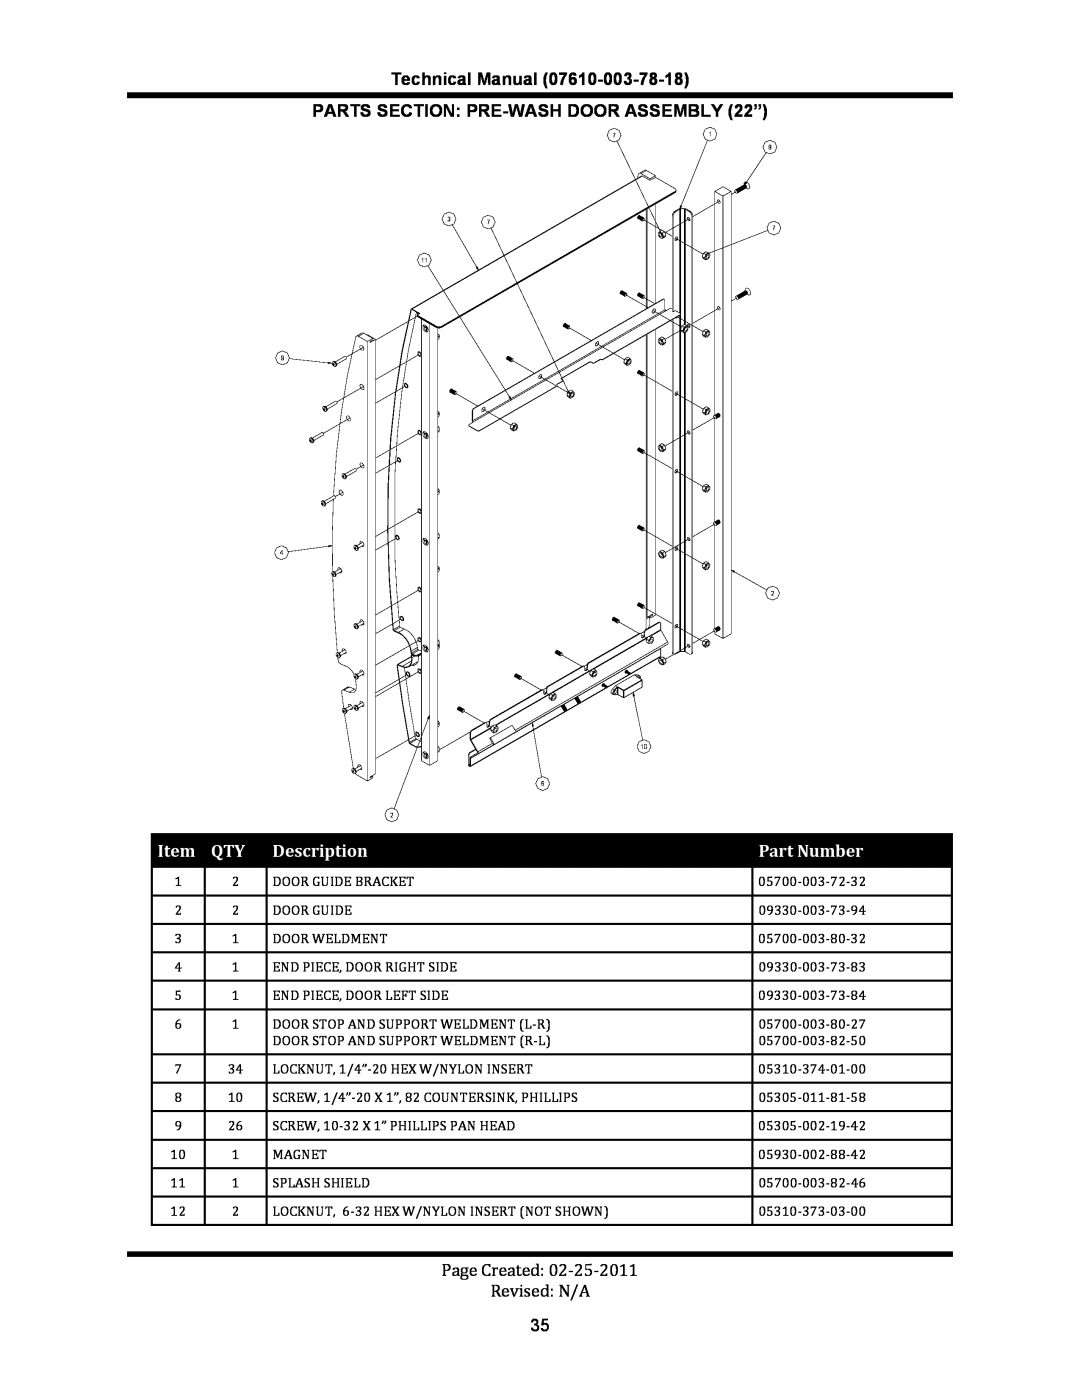 Jackson CREW 66S, CREW 44S manual Technical Manual PARTS SECTION PRE-WASH DOOR ASSEMBLY 22”, Description, Part Number 